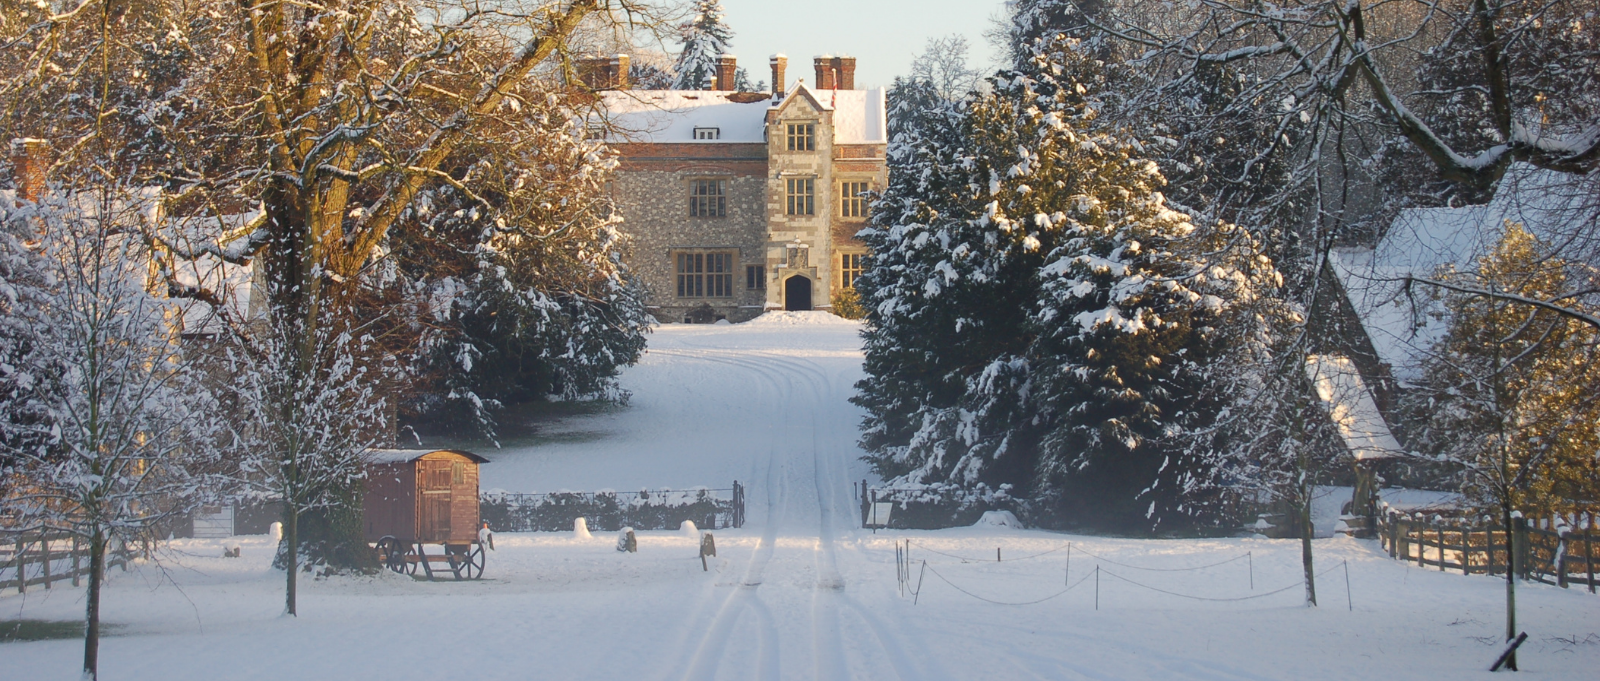 Chawton House in Winter